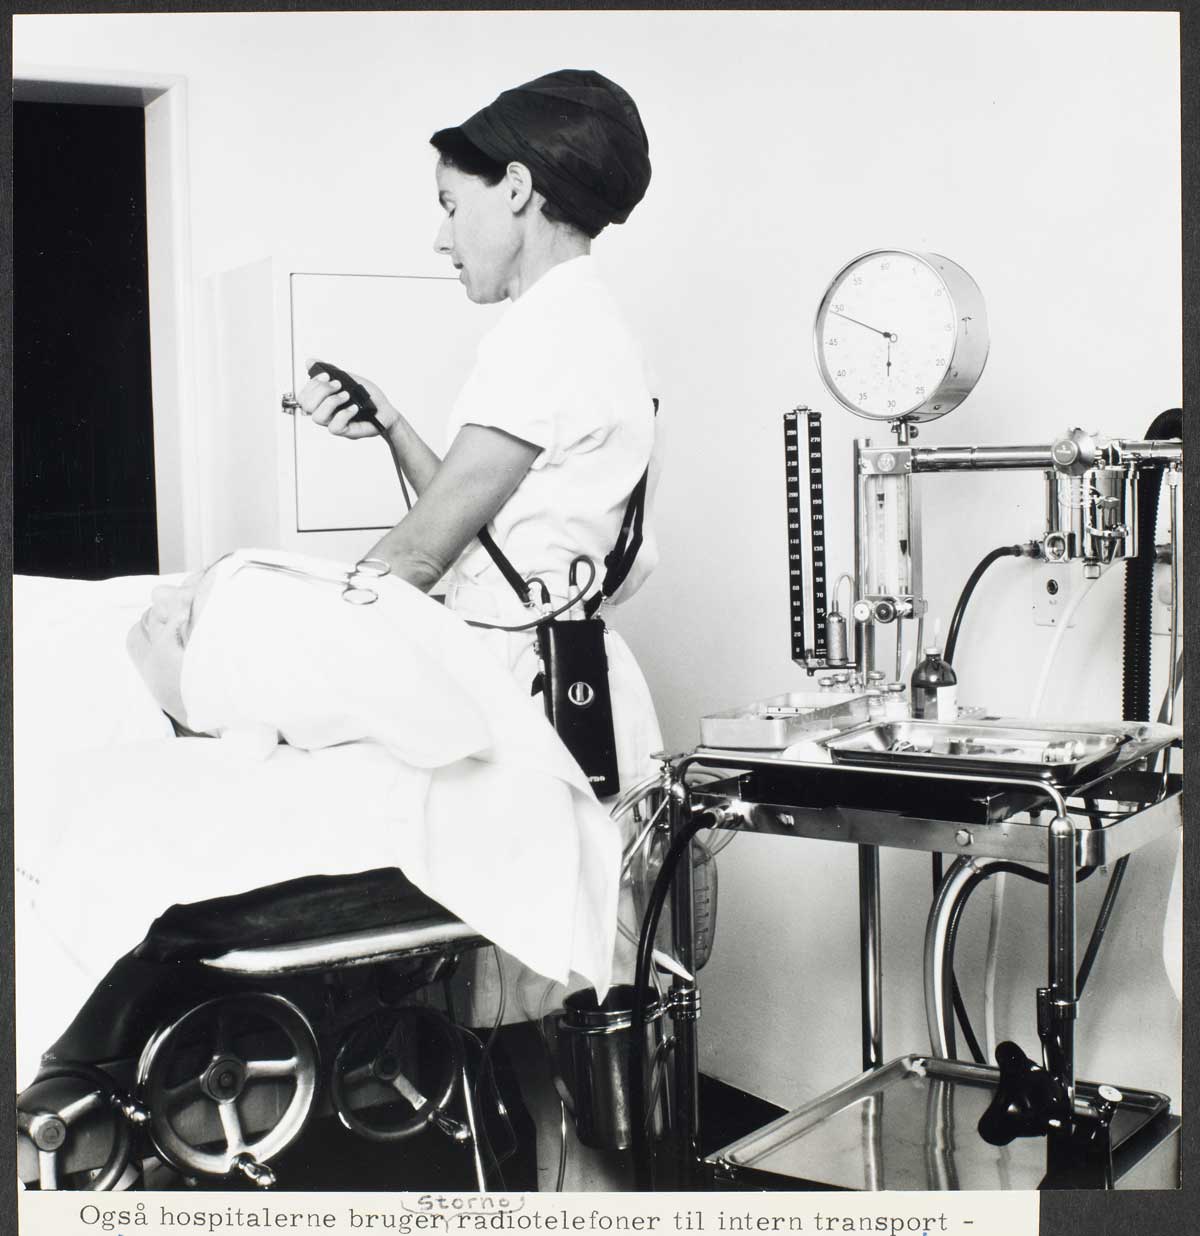 Nurse in hospital using Storno mobile radio telephone